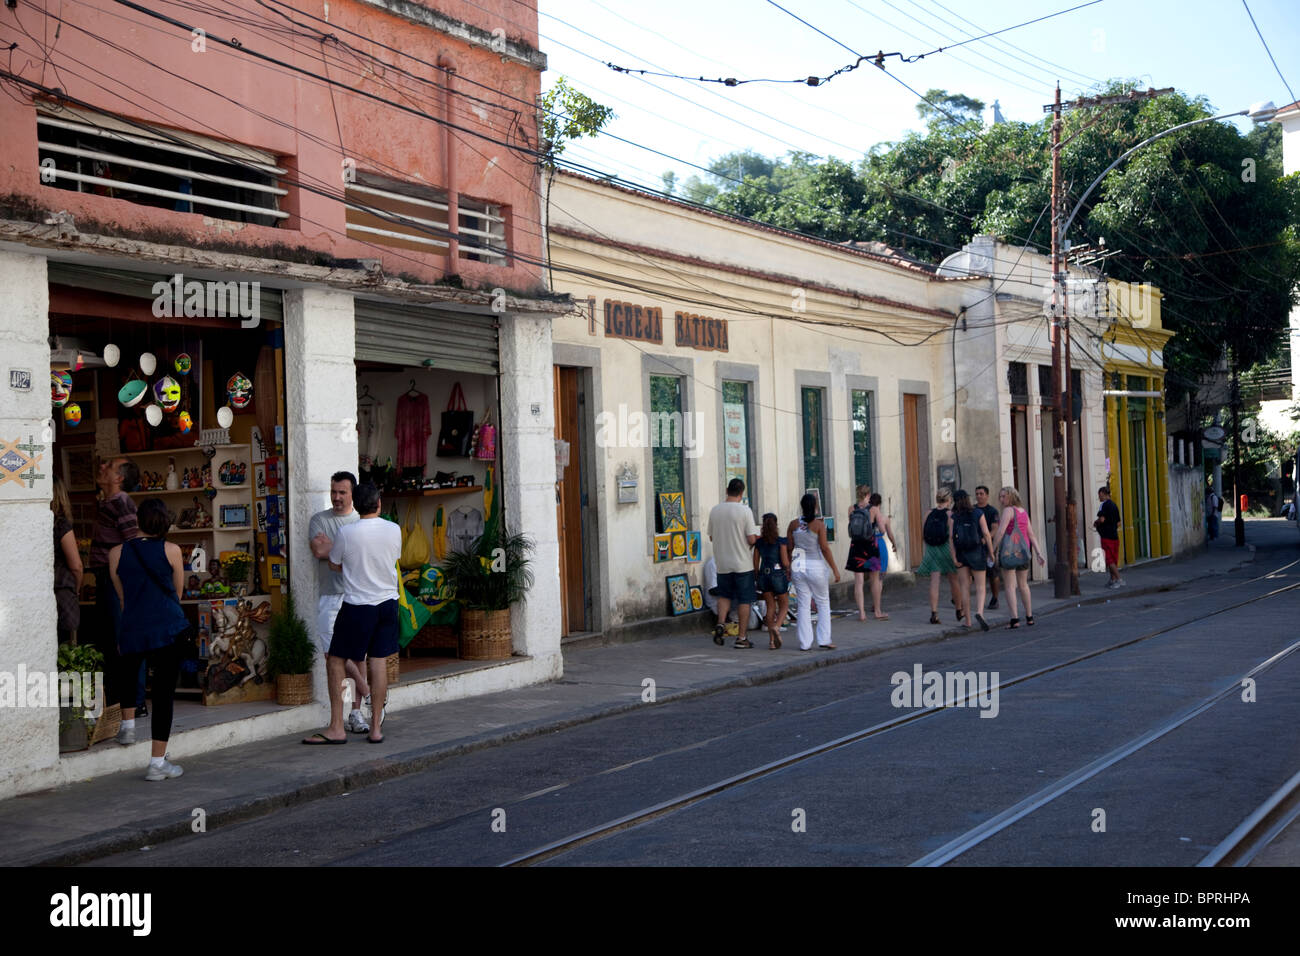 Santa Teresa, the hilltop bohemian district of Rio de Janeiro, Brazil that is quickly becoming gentrified. Stock Photo